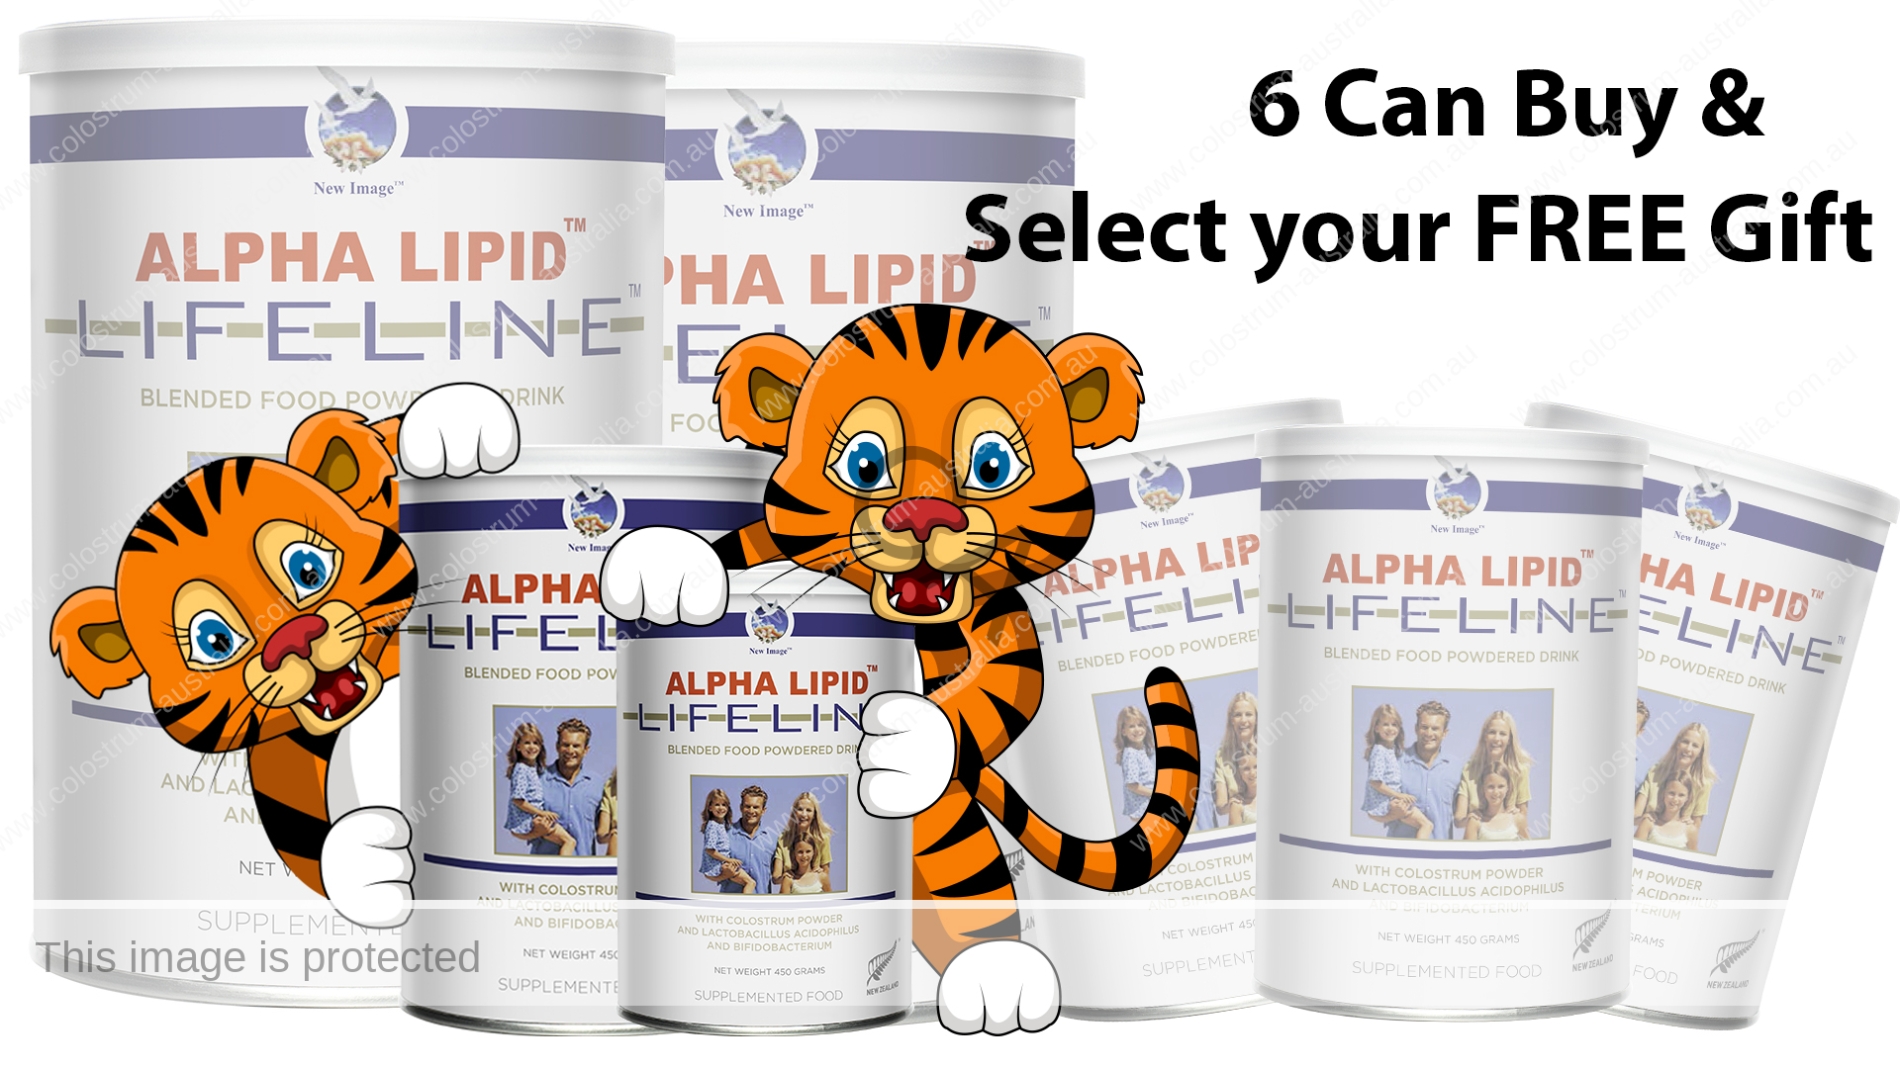 Alpha Lipid Lifeline 6 can buy and free gift